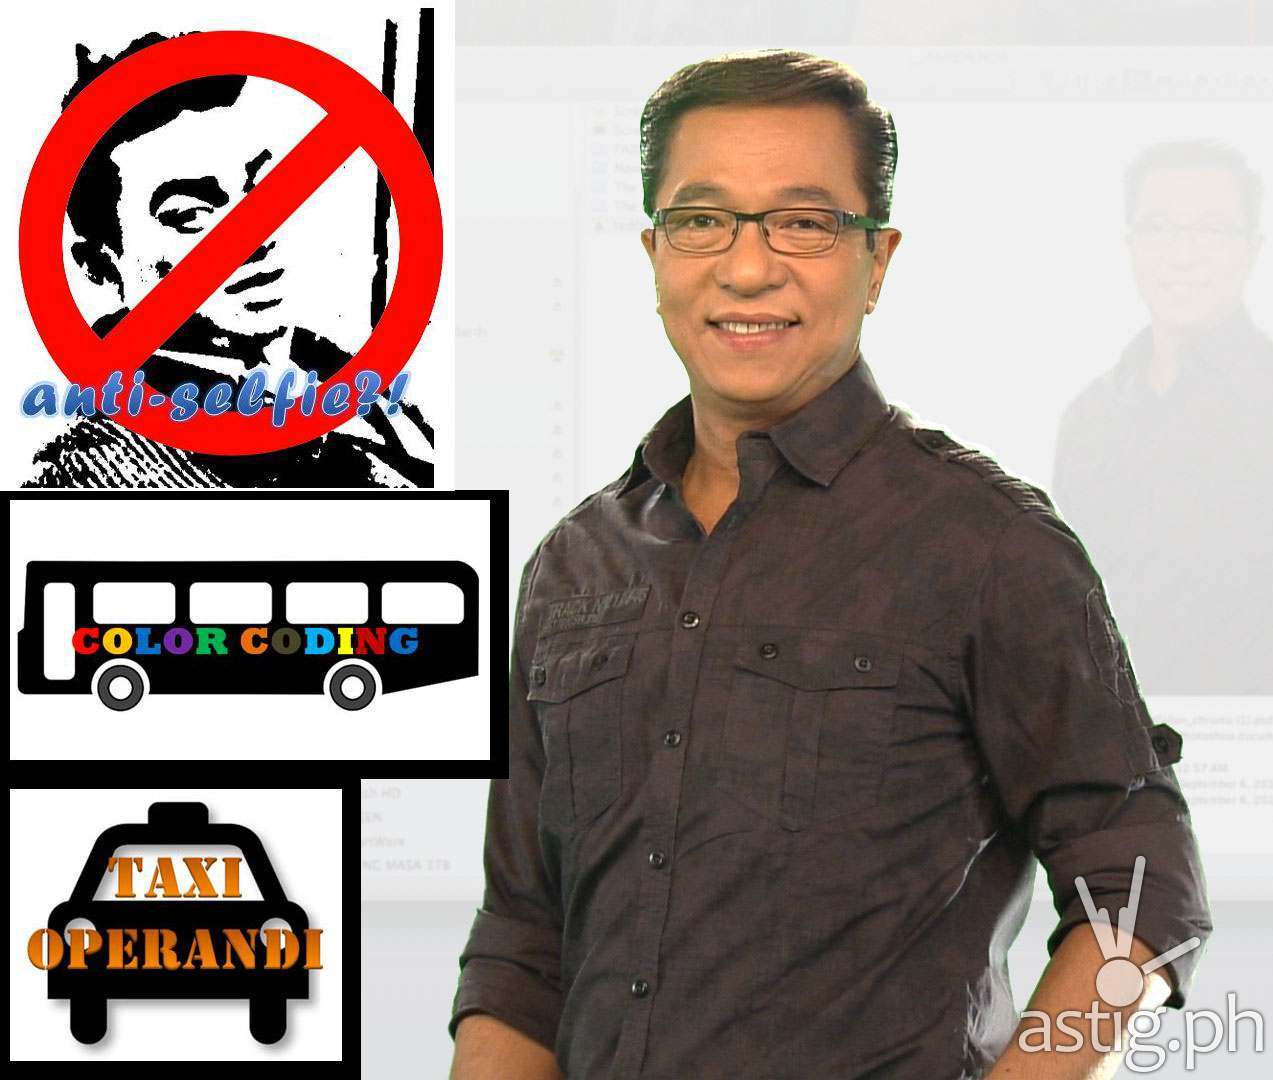 Ted Failon Ngayon MMDA bus color coding scheme anti selfie bill taxi operandi